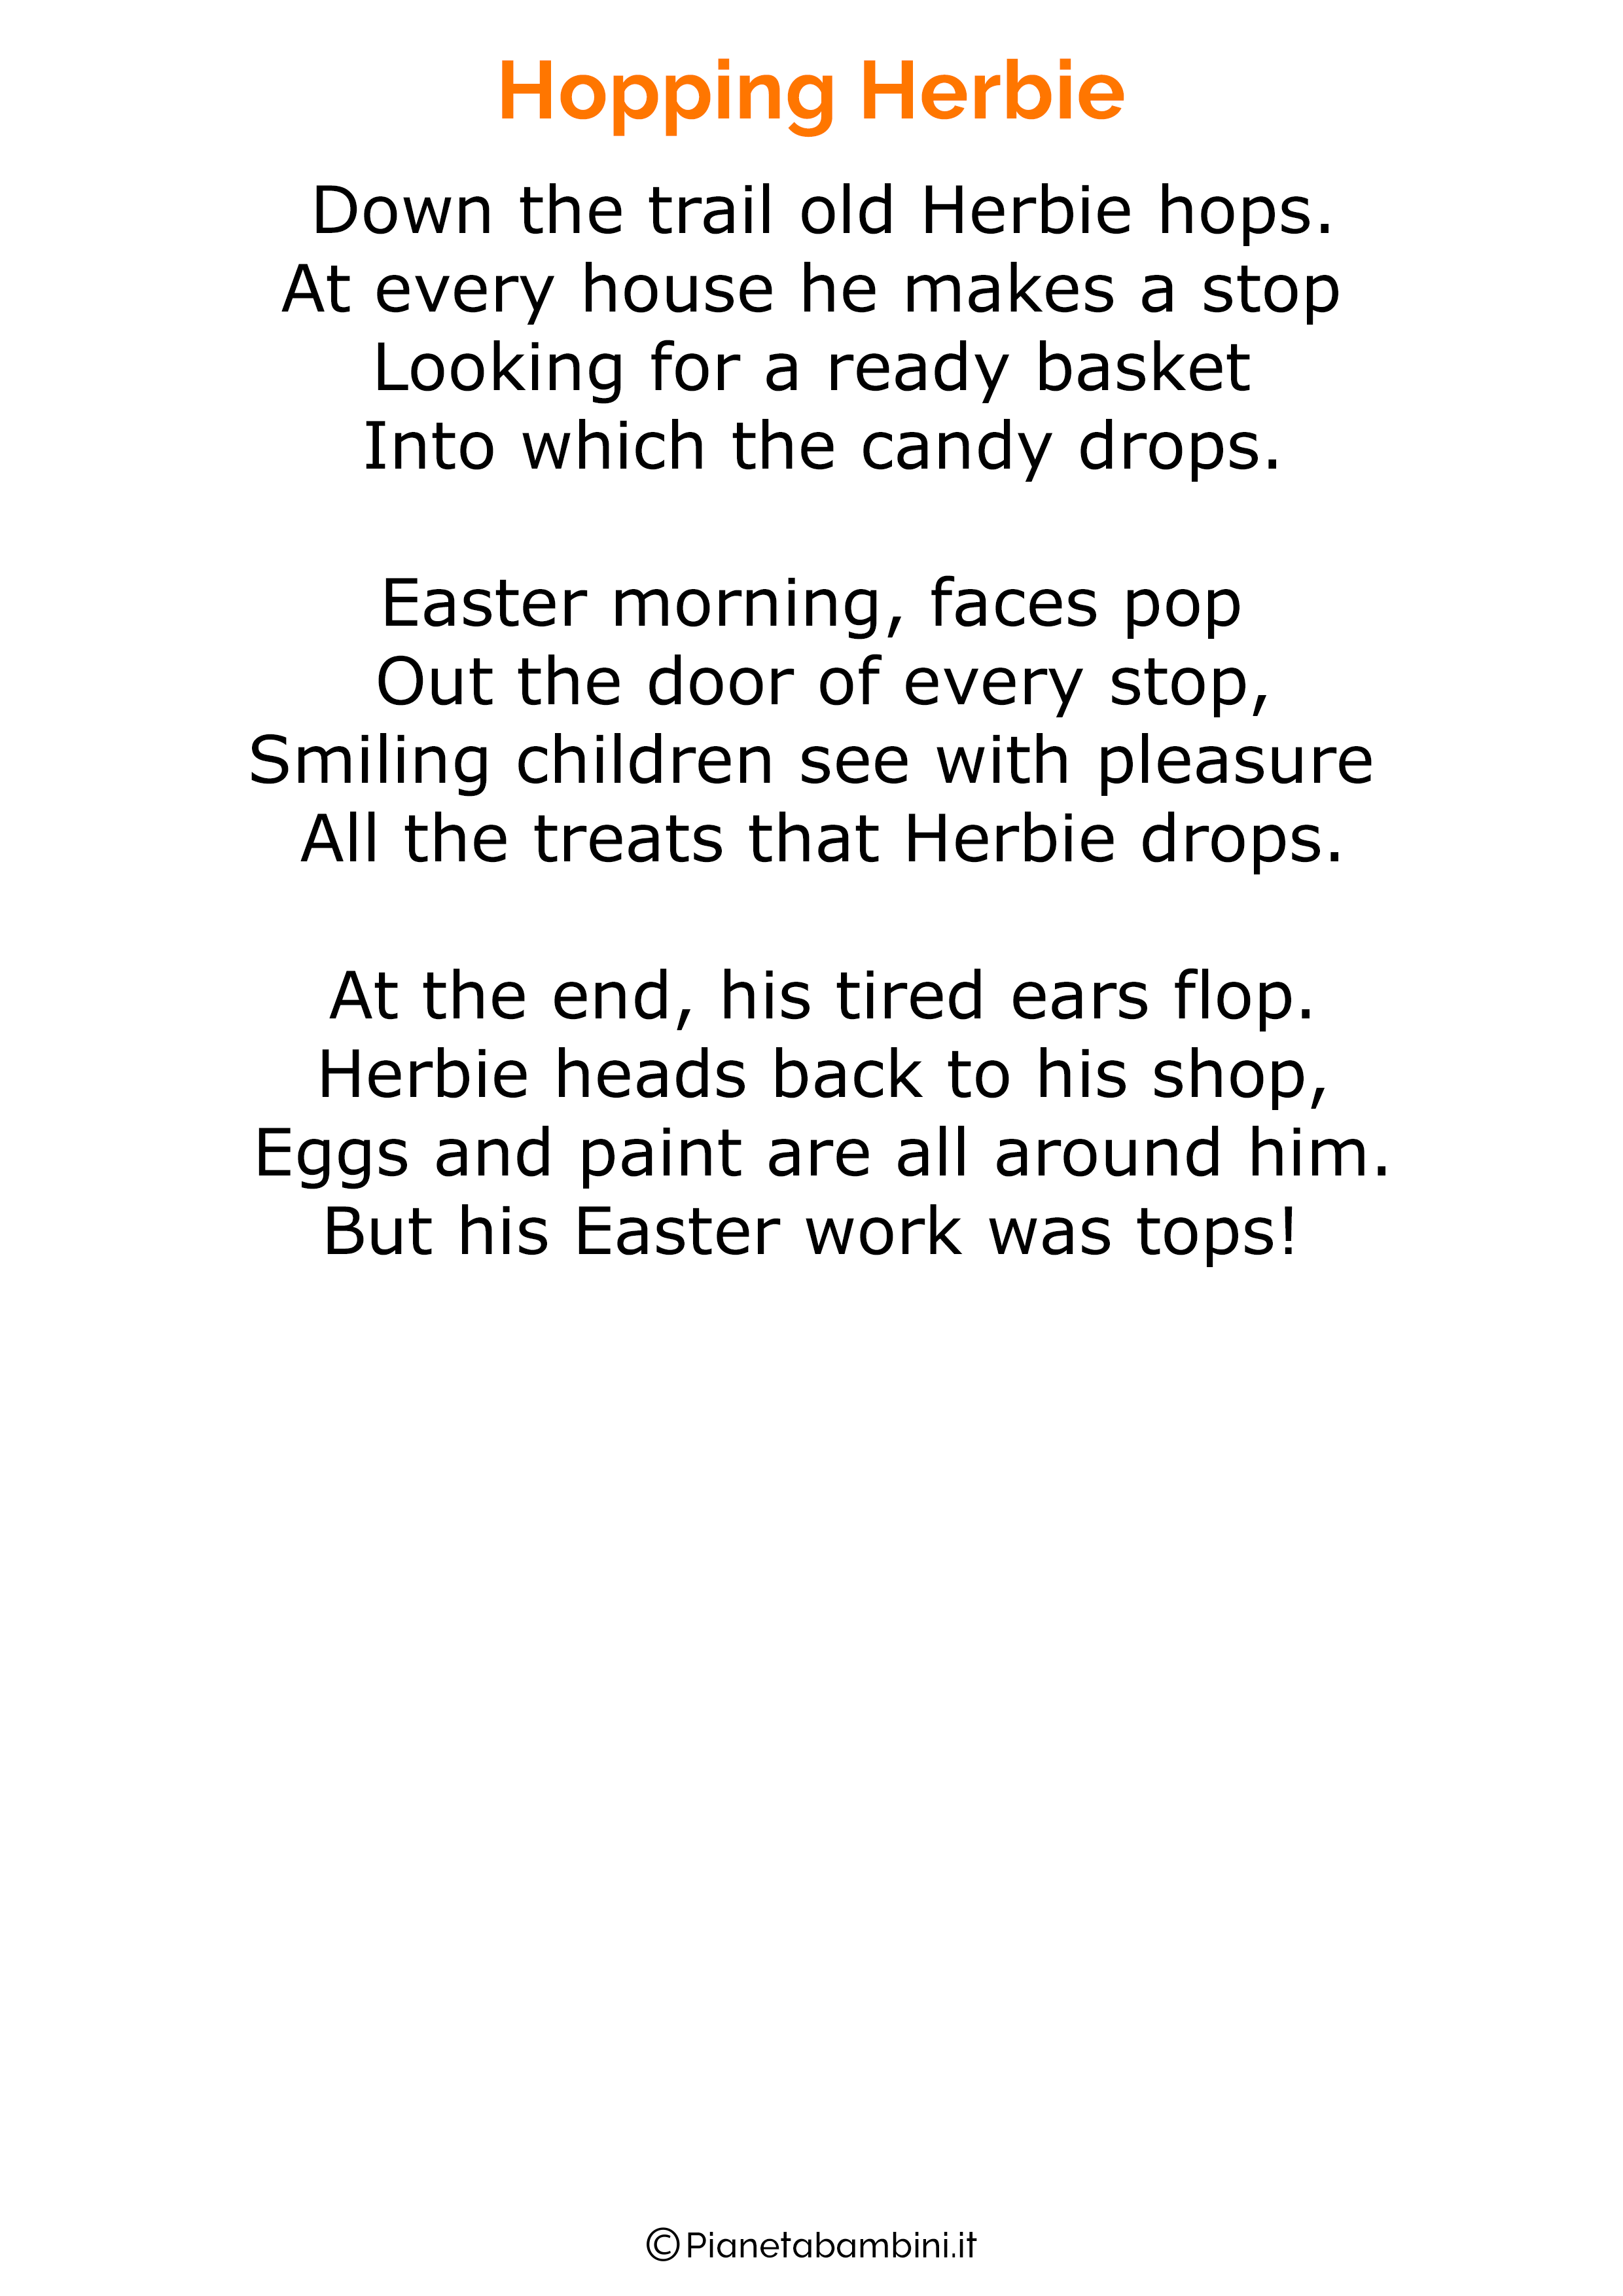 Poesie di Pasqua in inglese per bambini 22